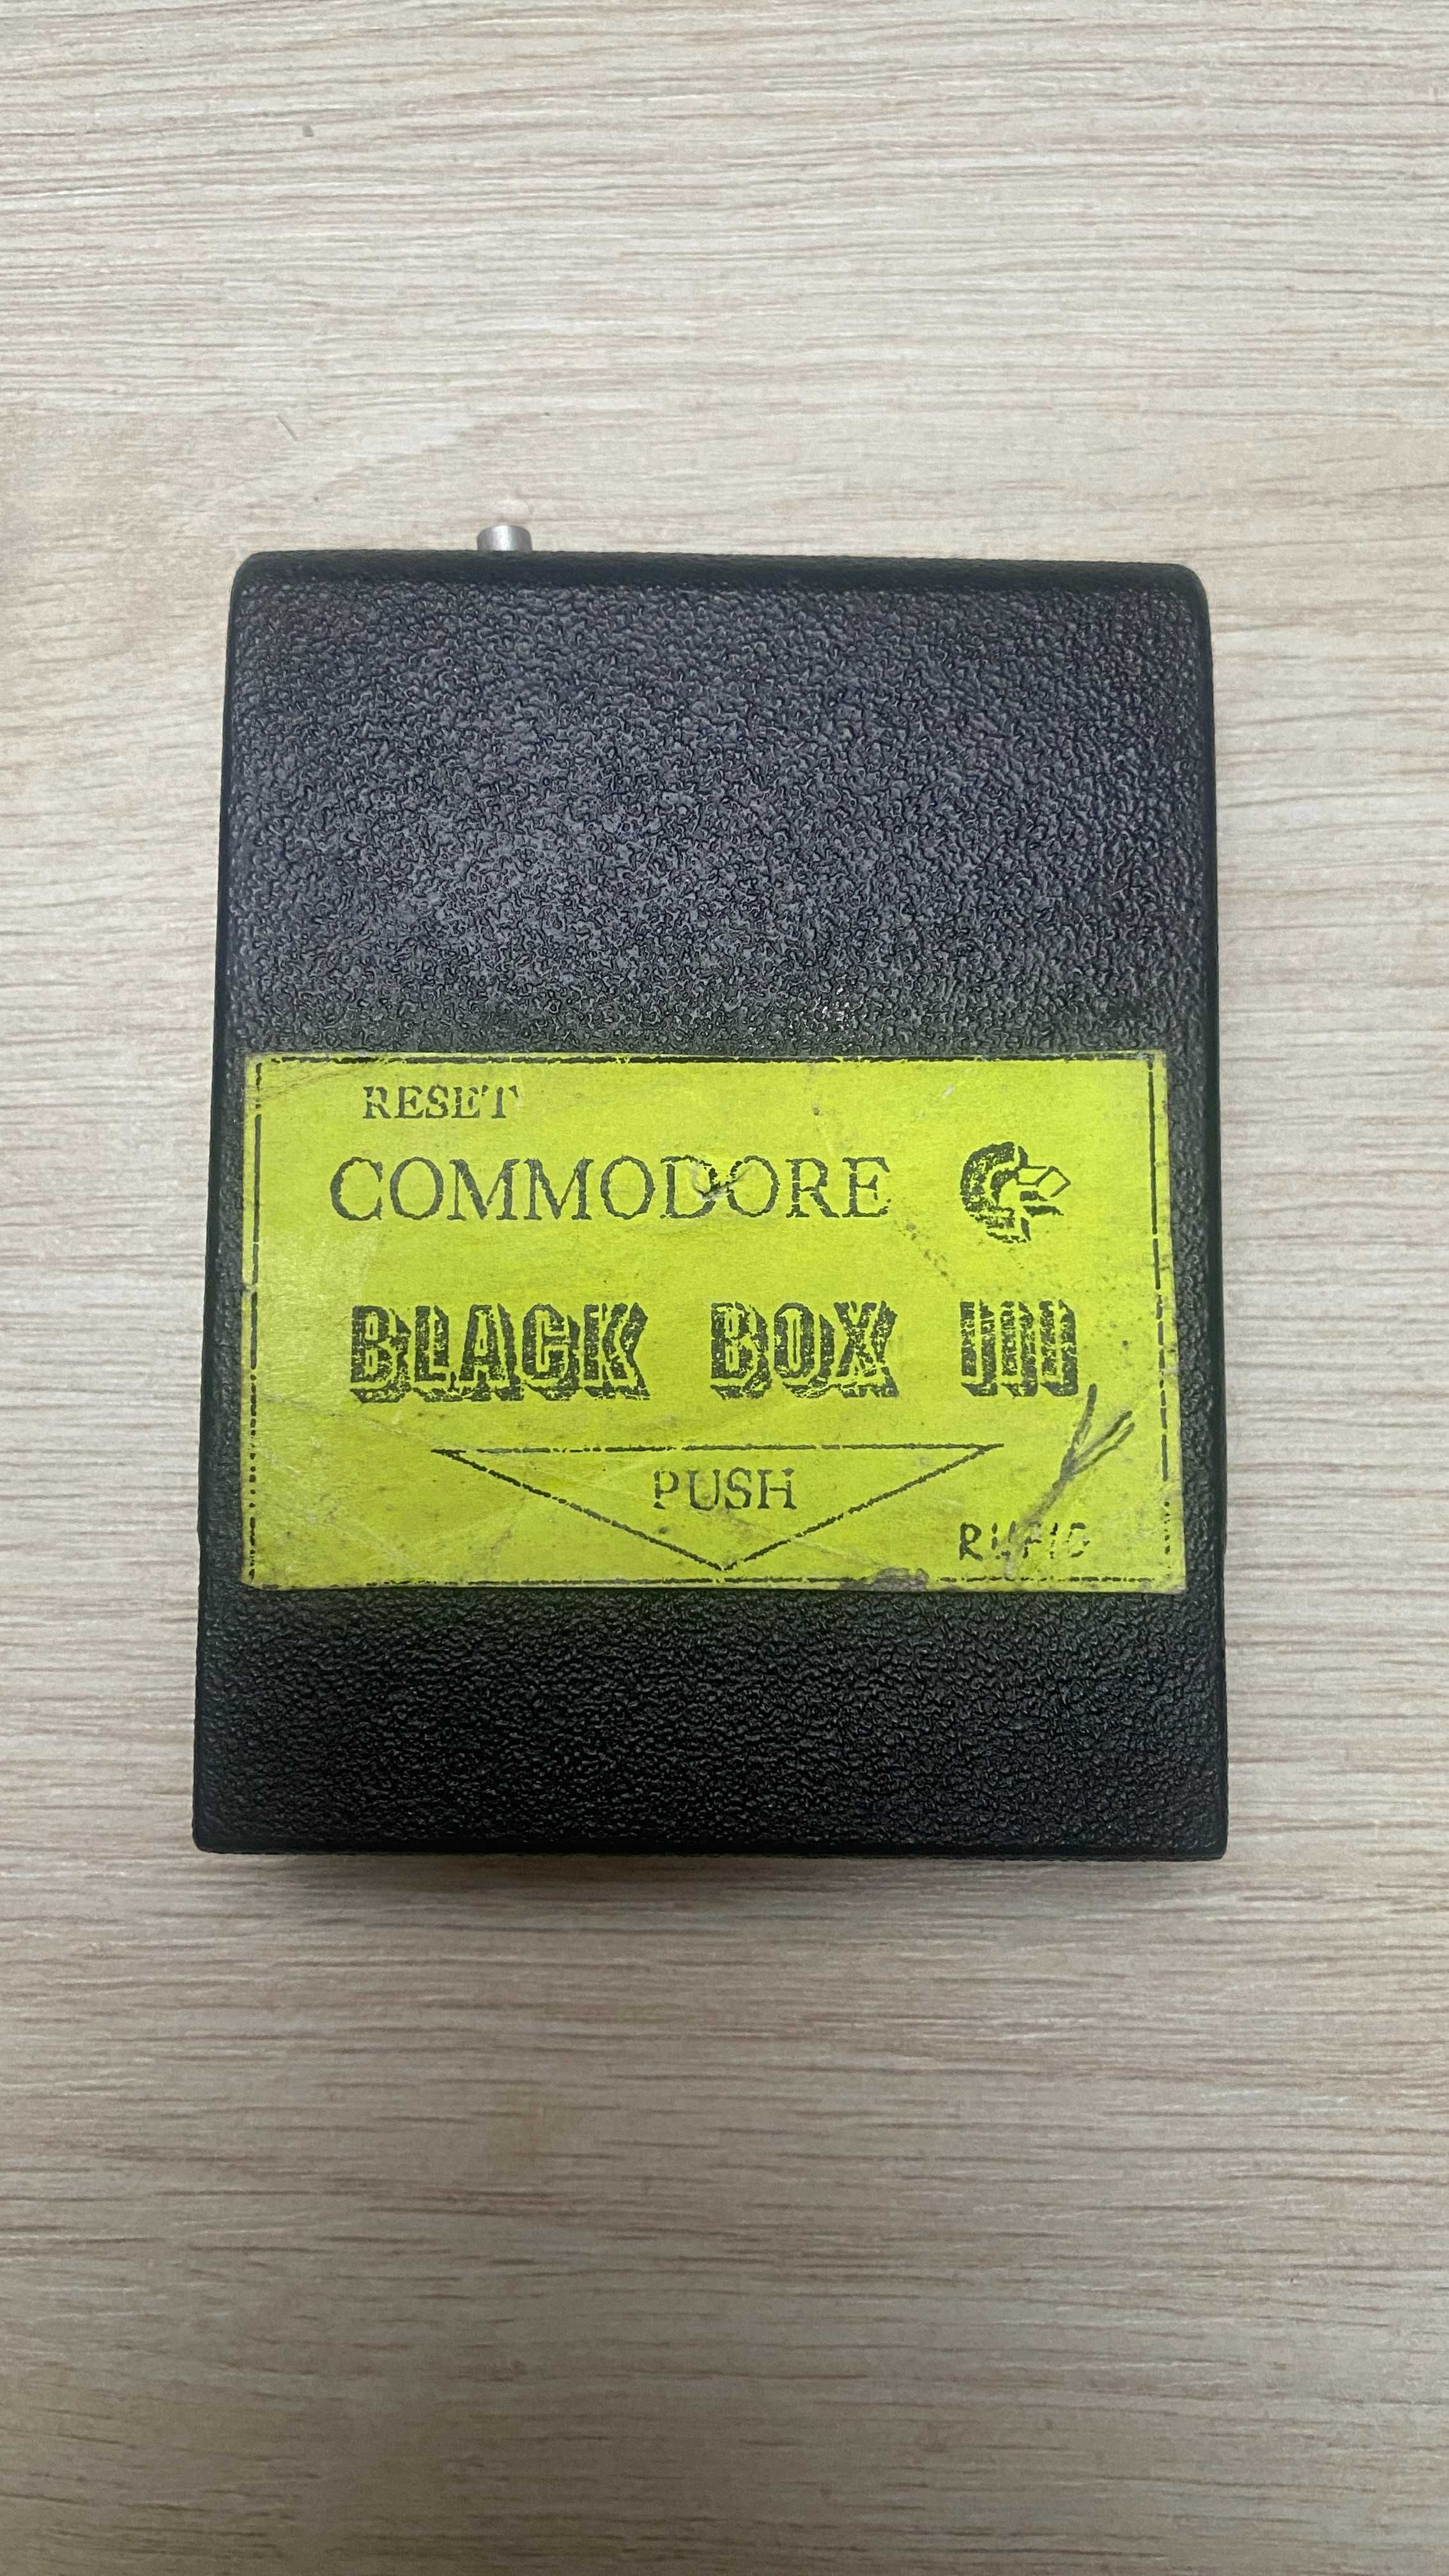 BLACK BOX v3 - kartridż do Commodore C64 / C128